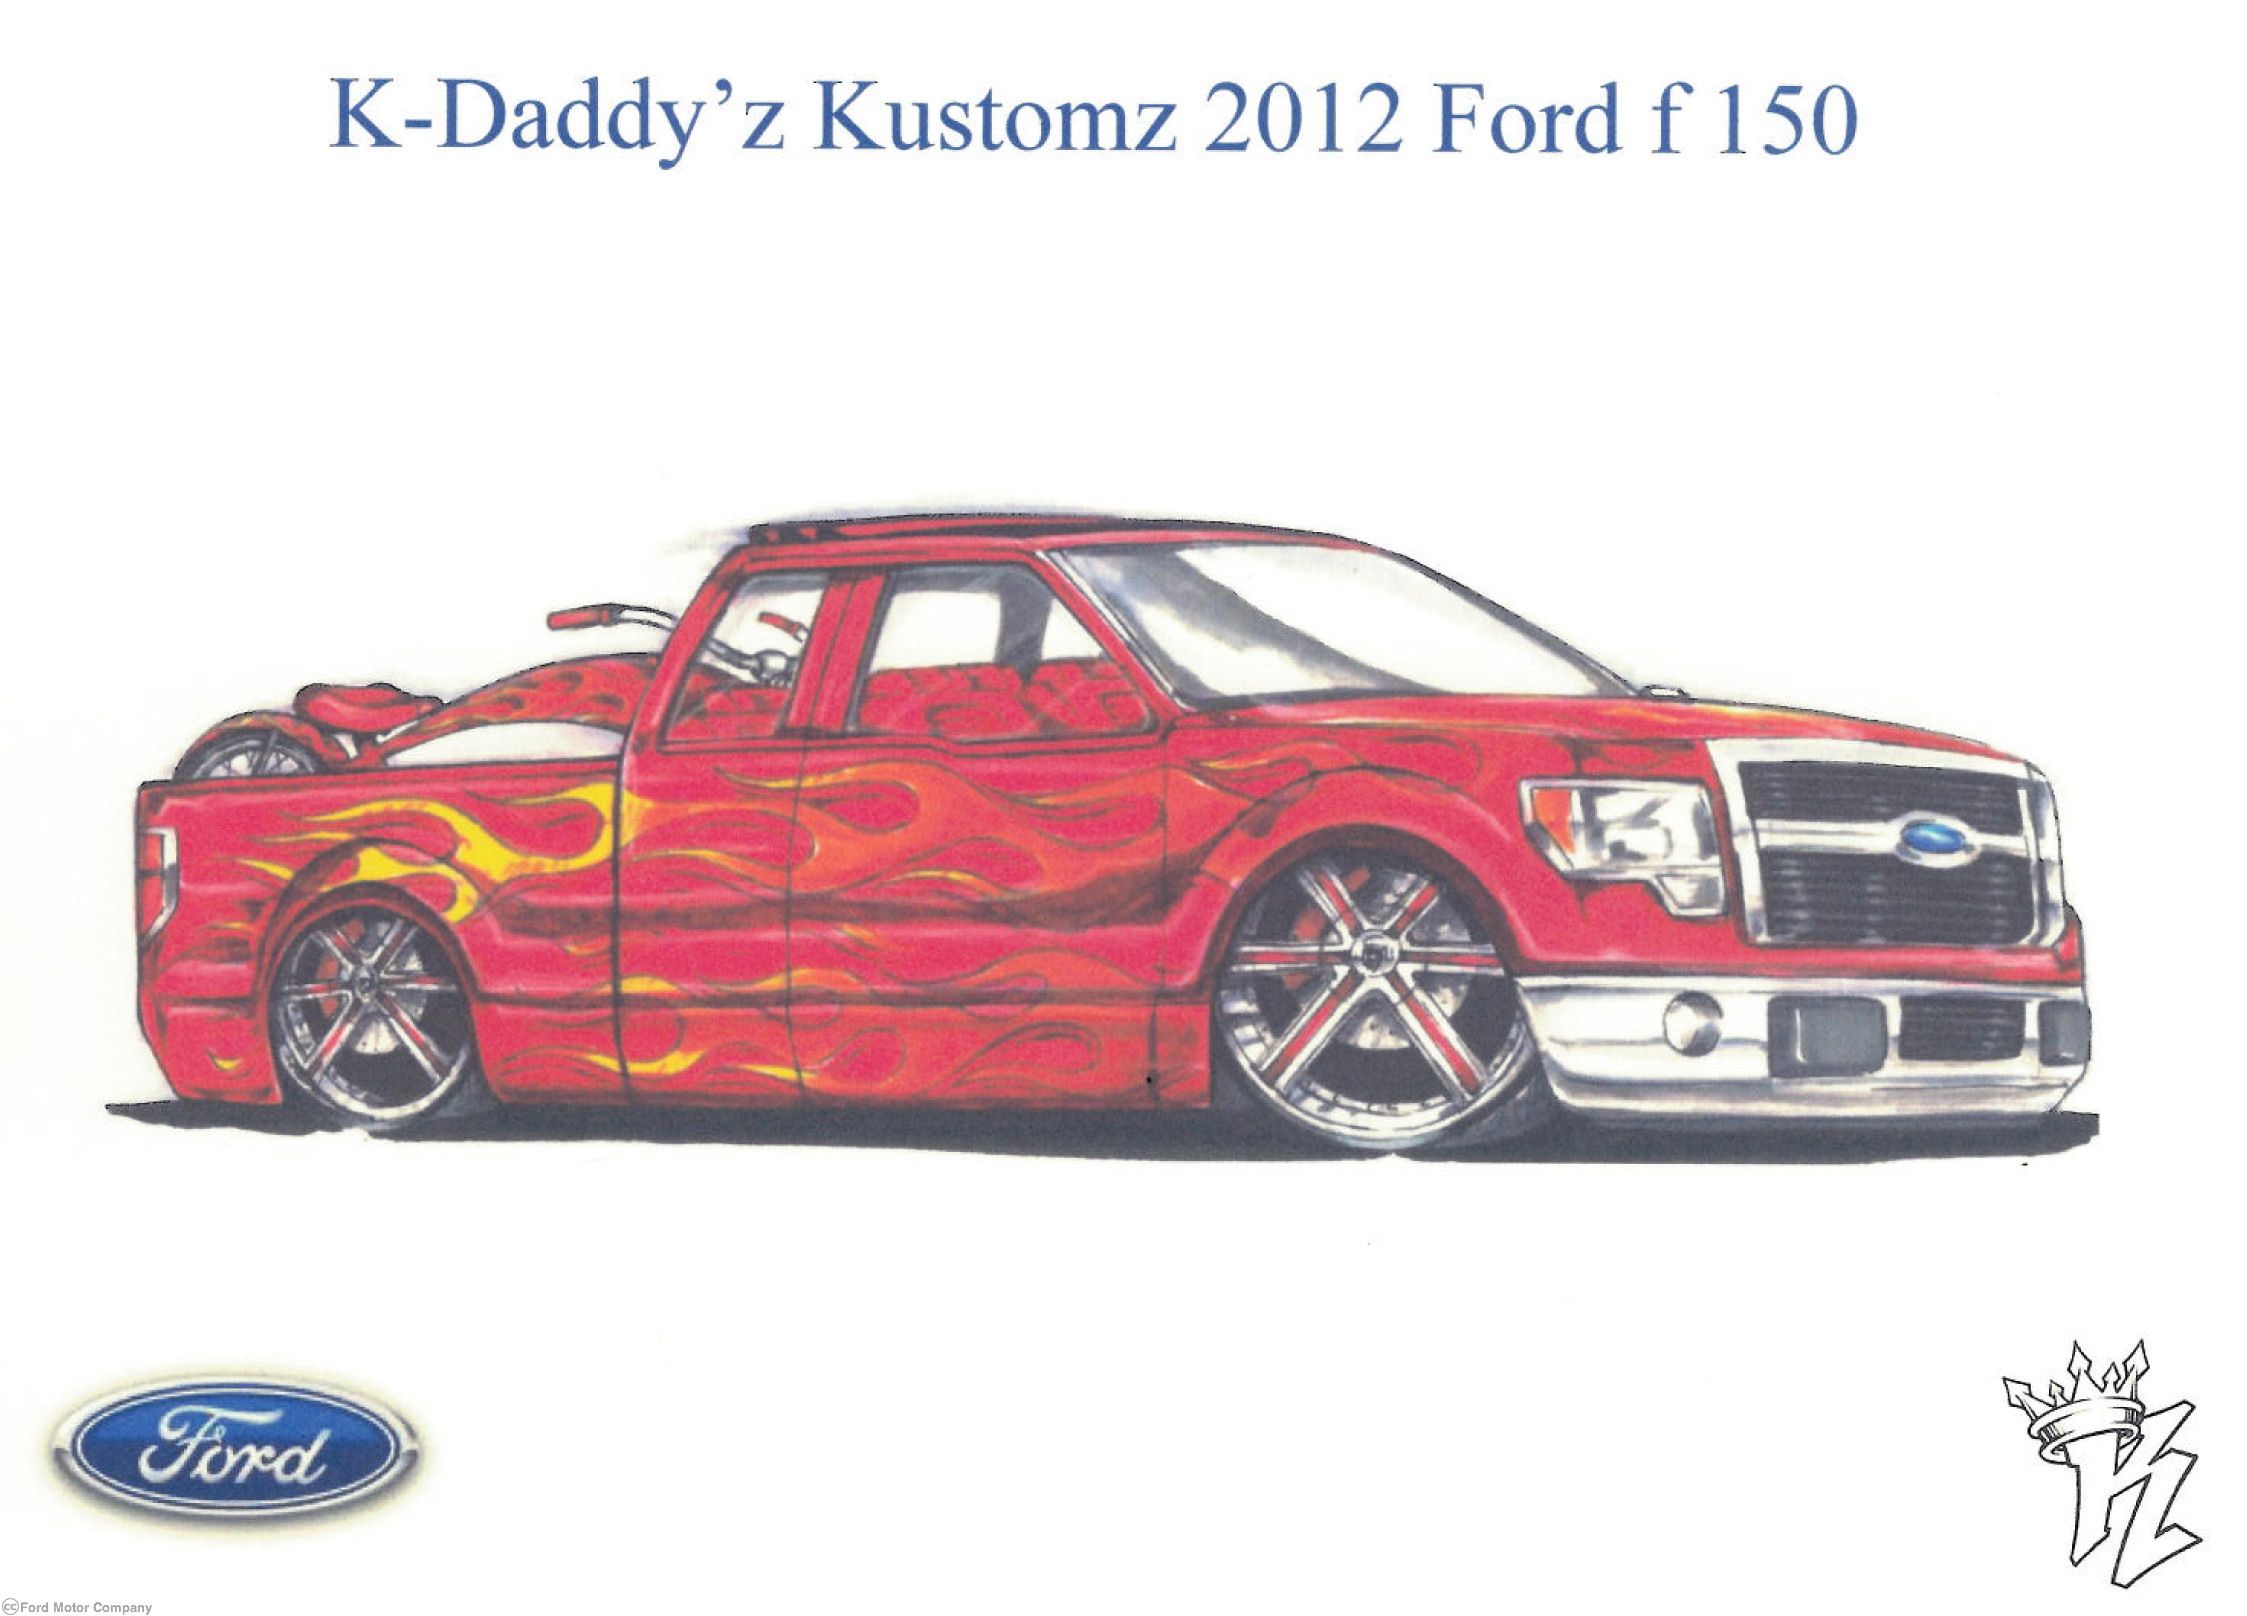 2013 Ford F-150 by K-Daddyz Kustomz